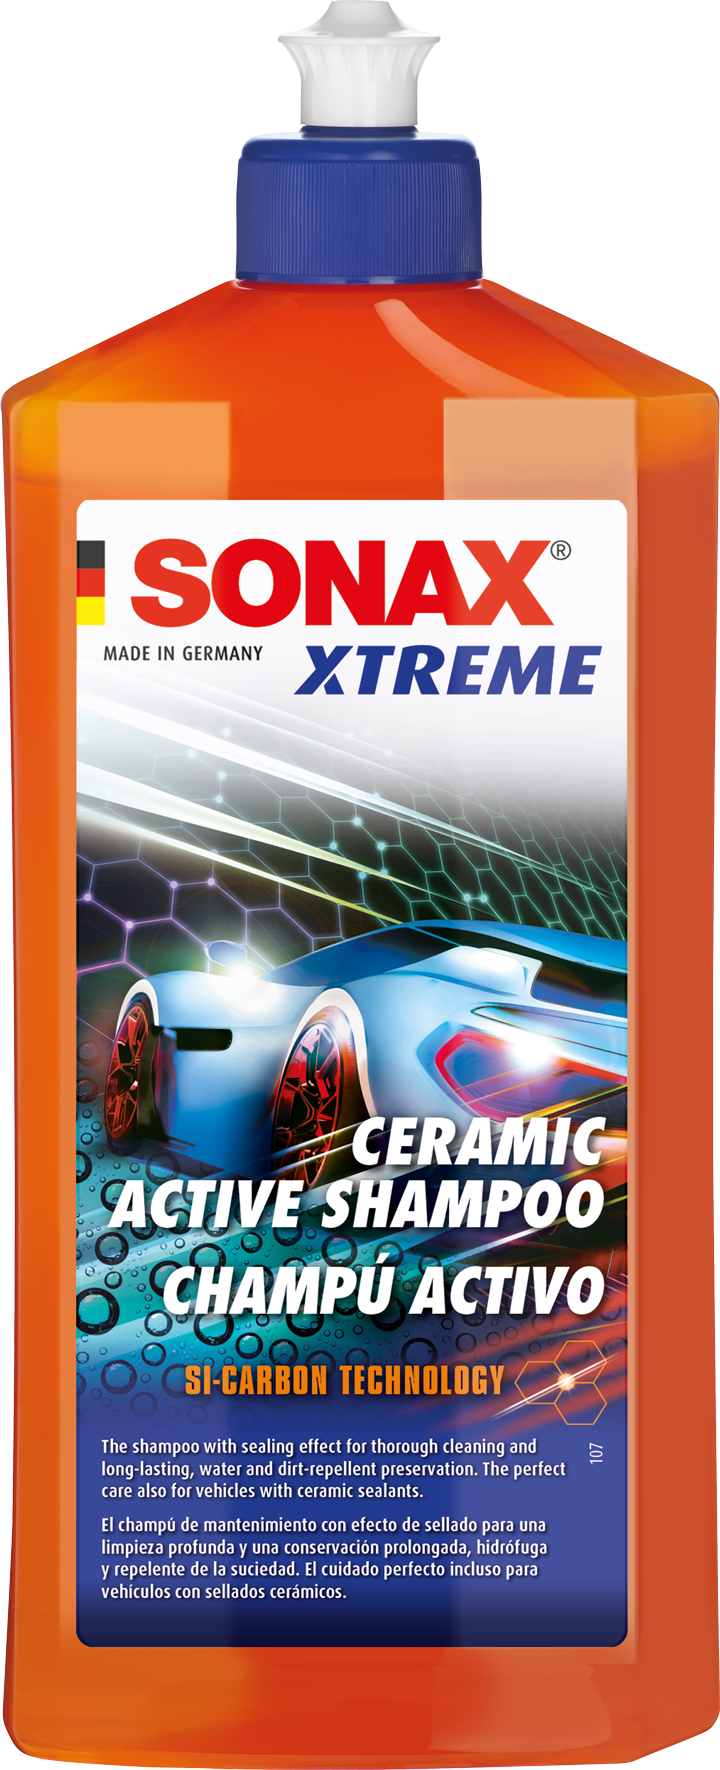 XTREME Ceramic Active Shampoo- XTREME Shampoo Dạng Gốm Hoạt Hoá 259200